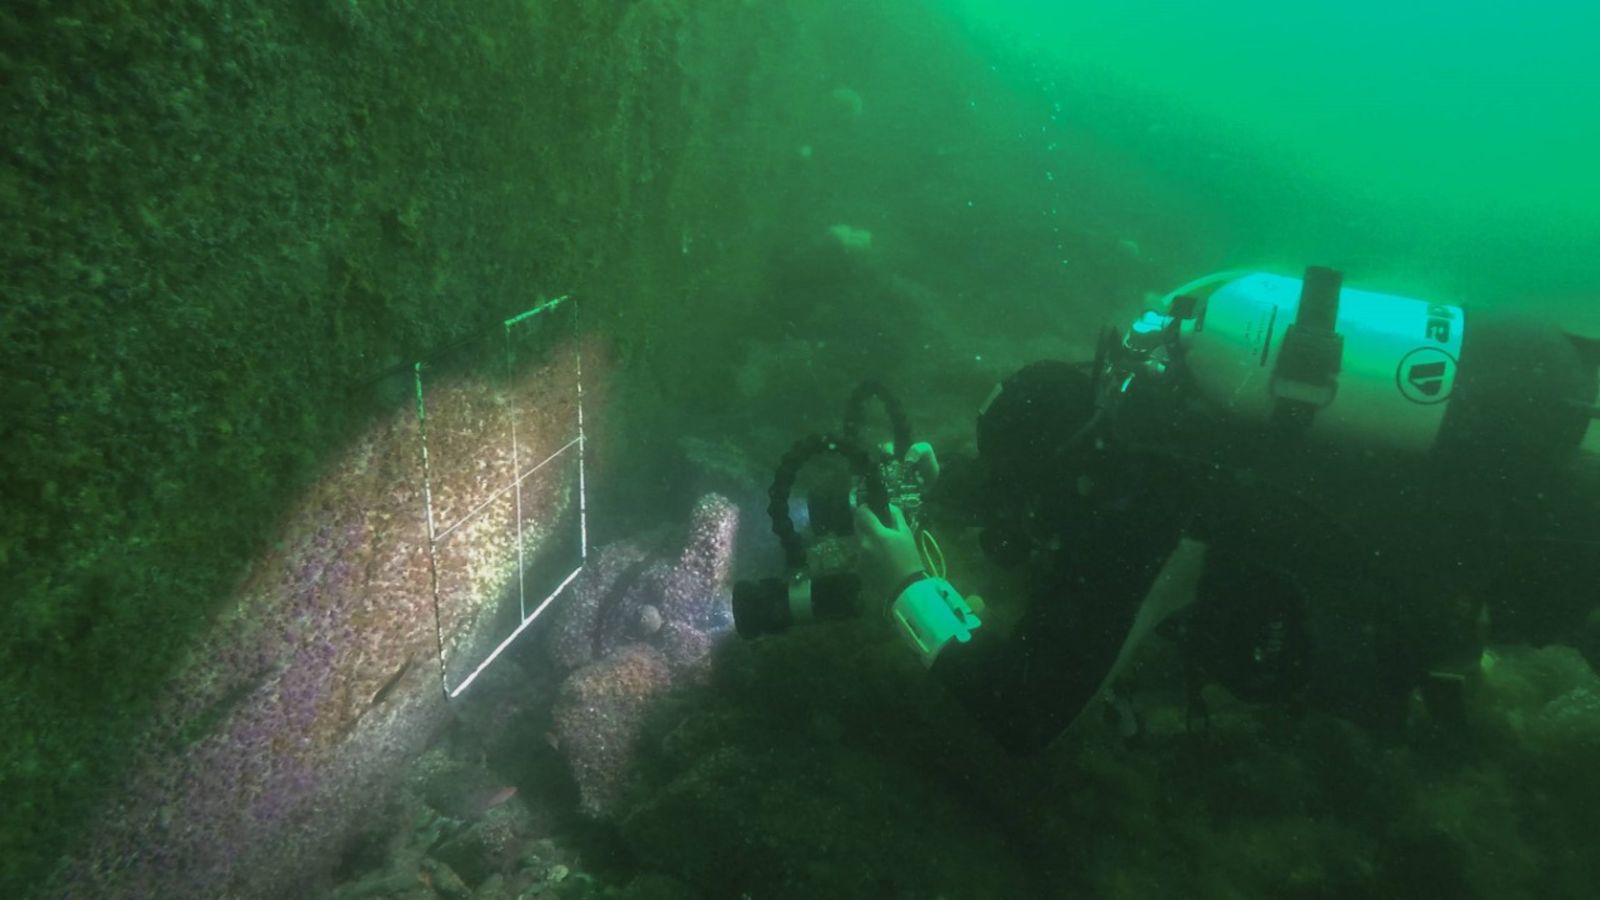 Valerio Micaroni conducting surveys of the underwater cliffs